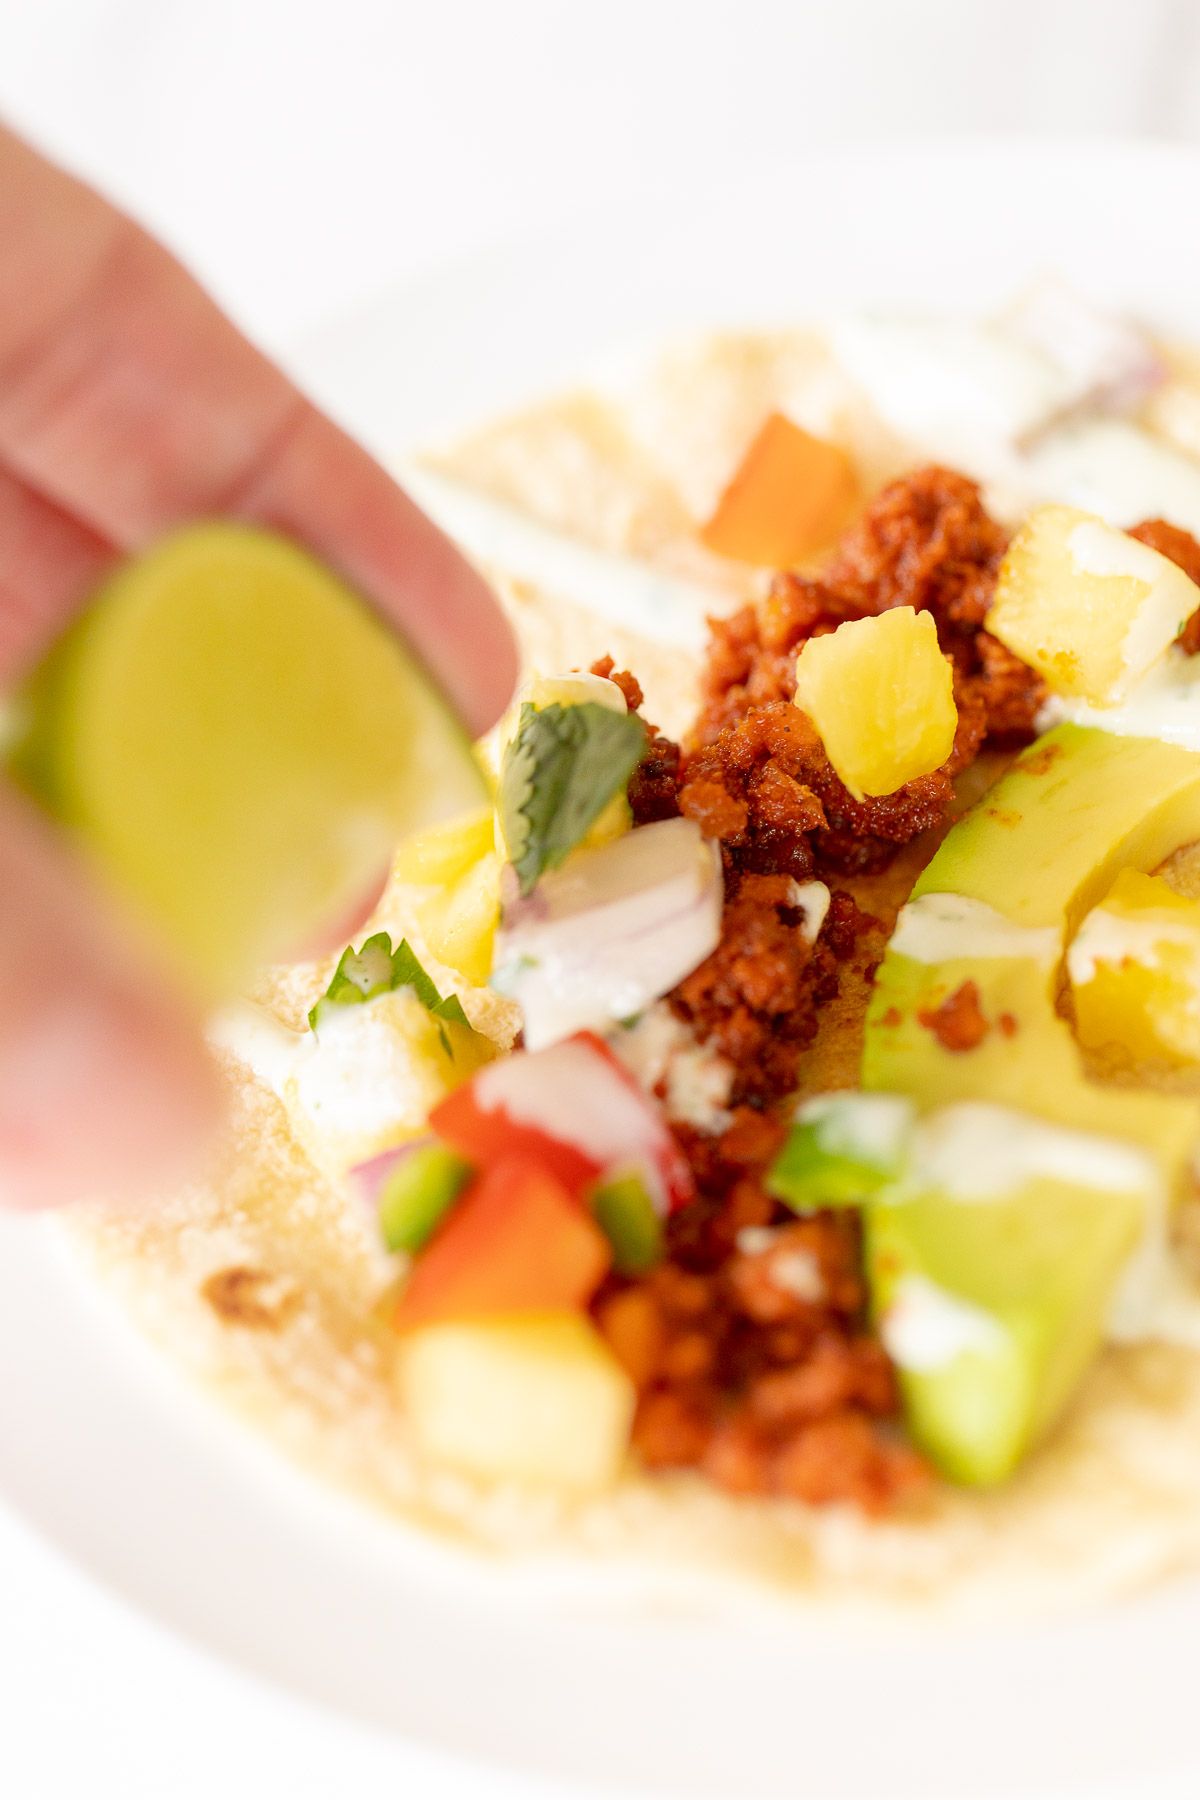 A hand squeezing a sliced lime over a chorizo taco